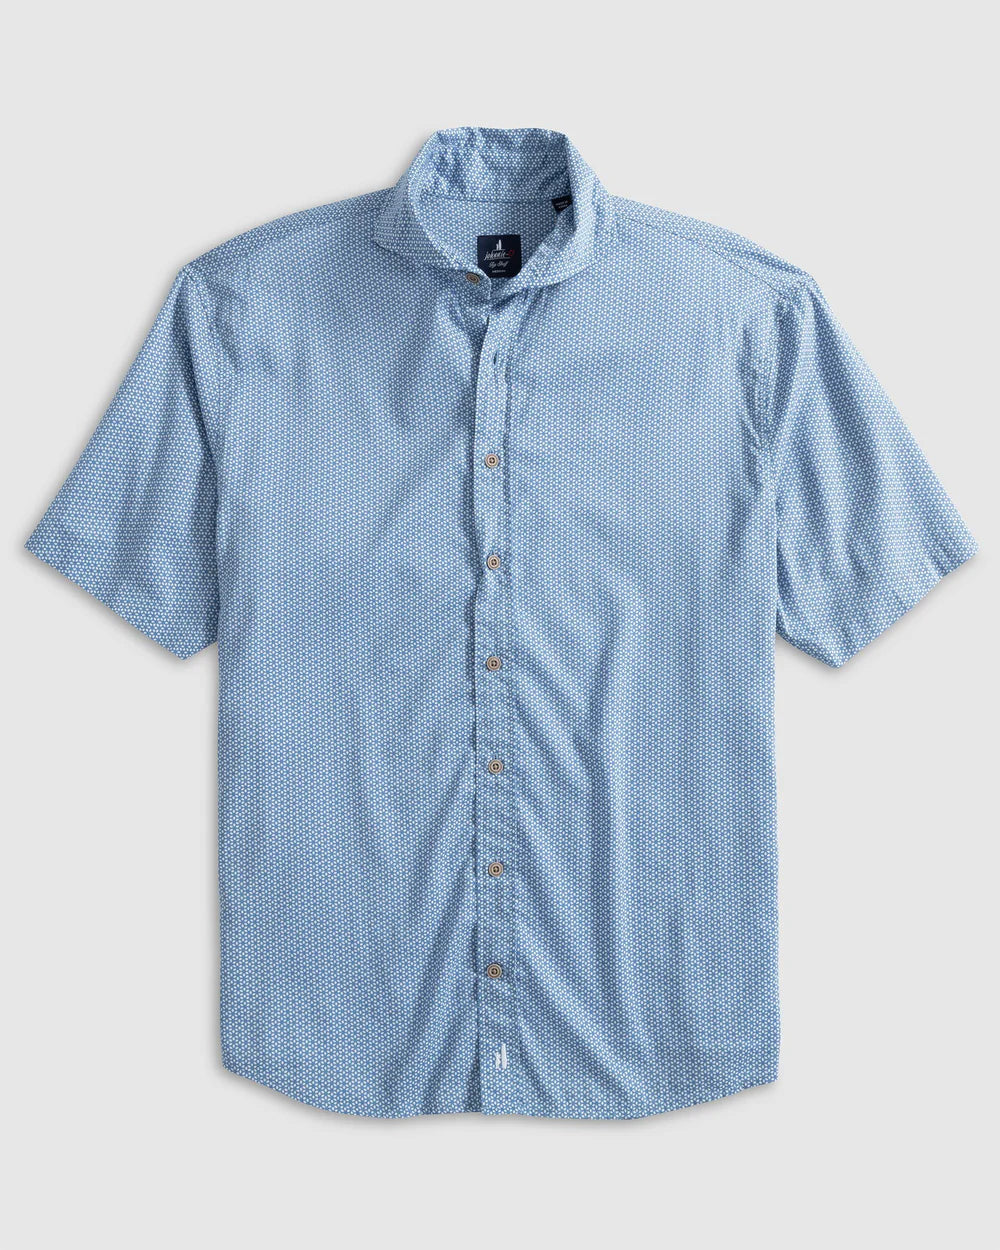 Stinson Top Shelf Button Up Shirt